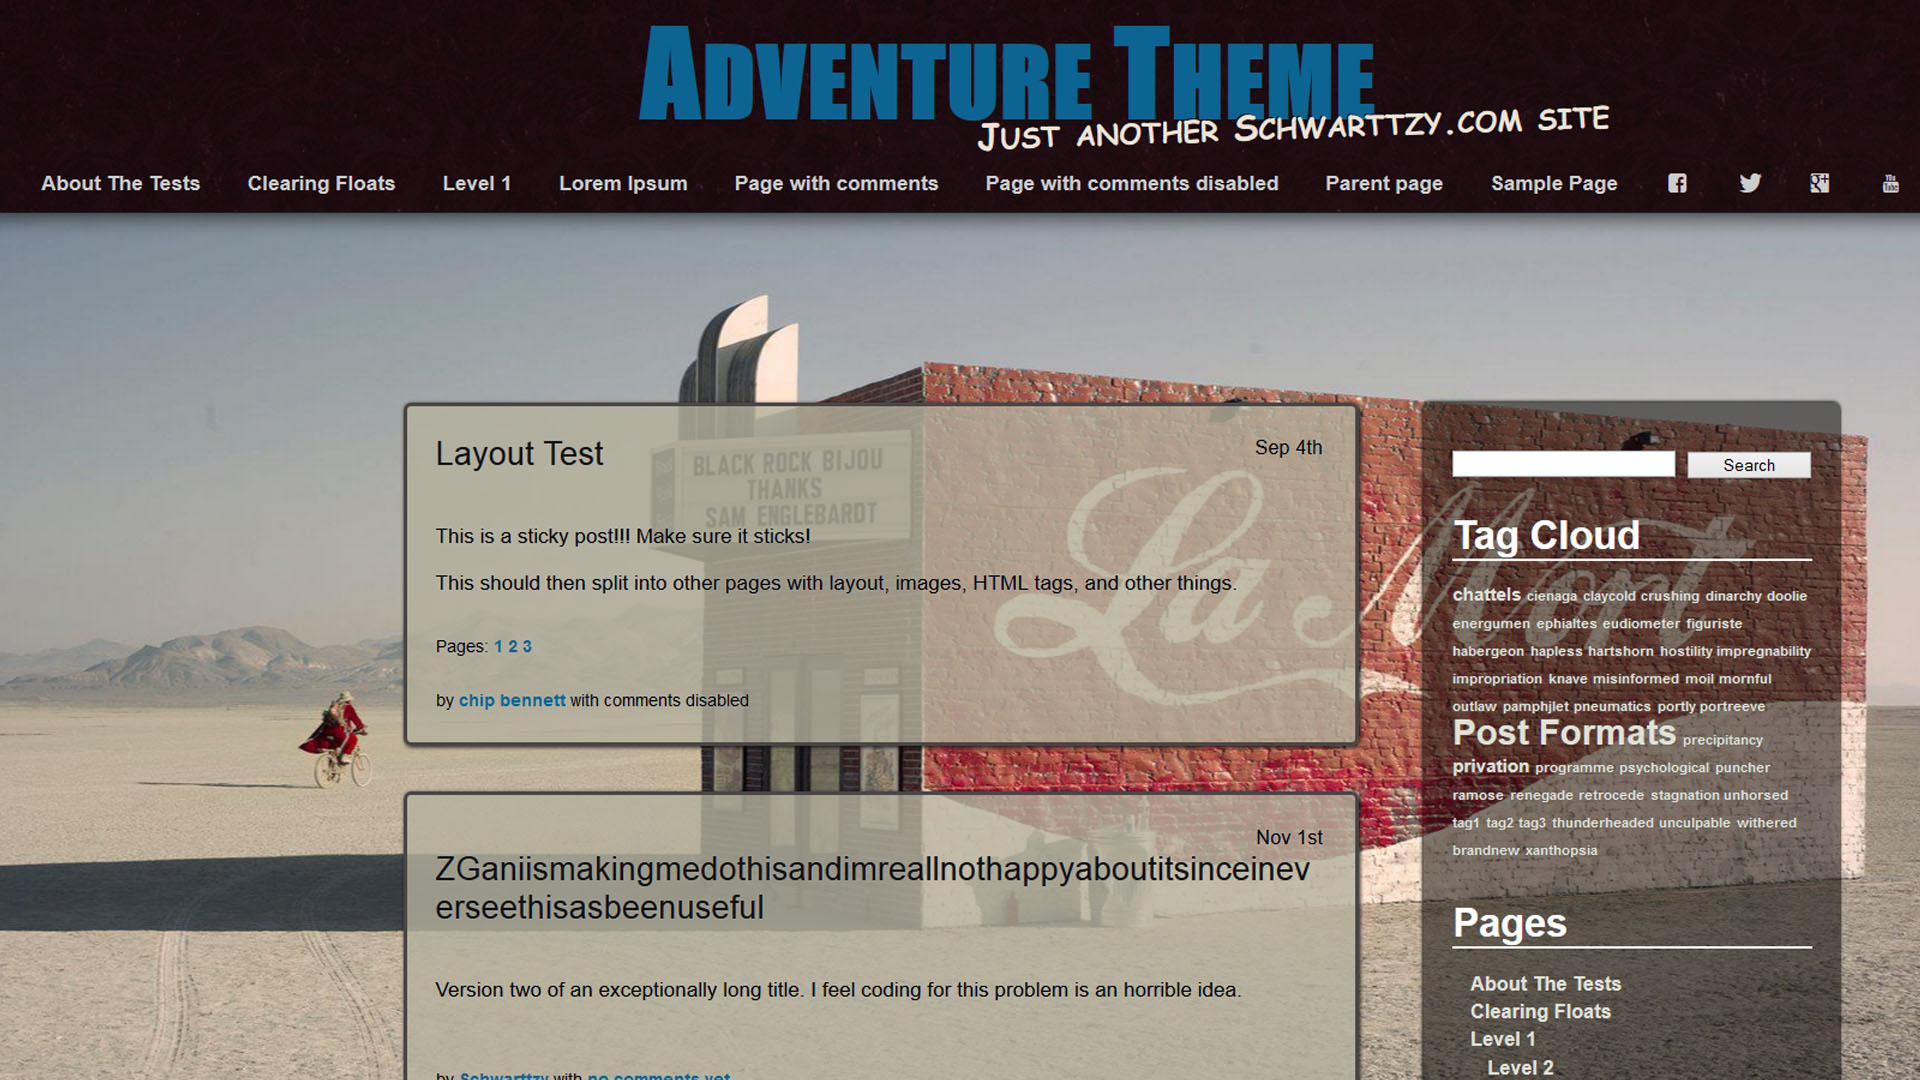 NEW Roblox Dark Theme & Font + New Website Layout? 